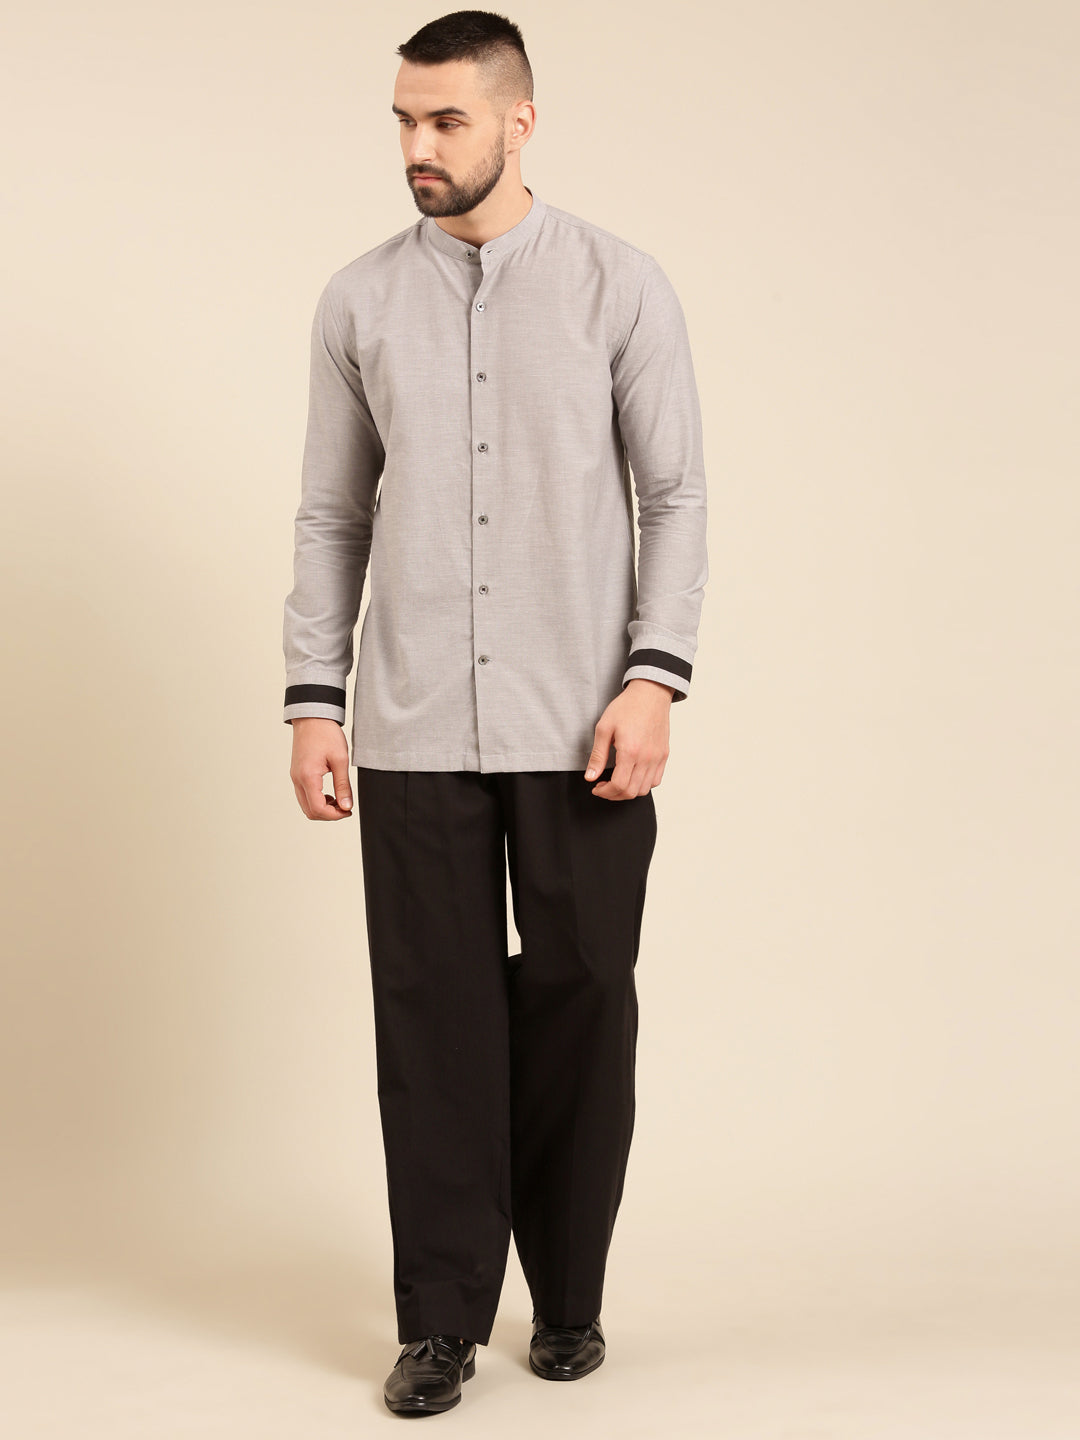 Black Pant Grey Shirt Cord Set - MMCRSET003